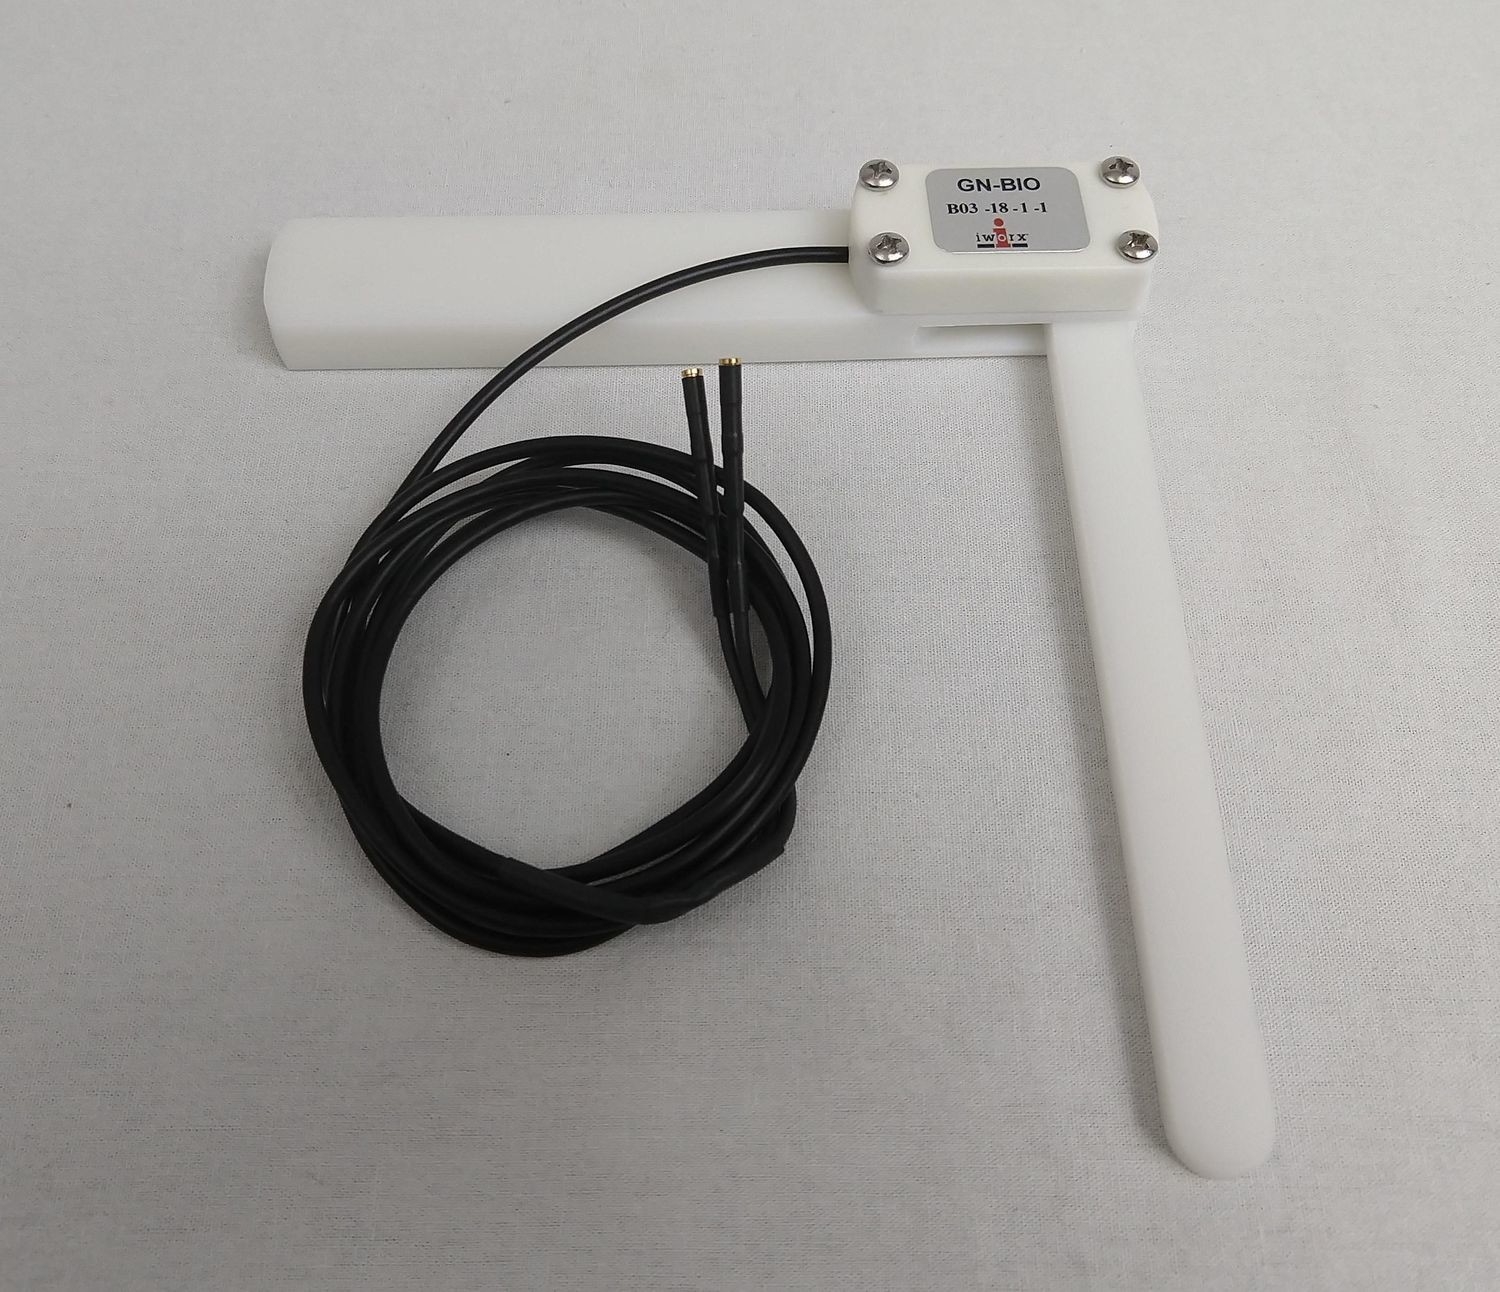 Single-Axis Goniometer with 6 inch arm for the IX-BIO4, IX-BIO8 or IX-B3G recorders